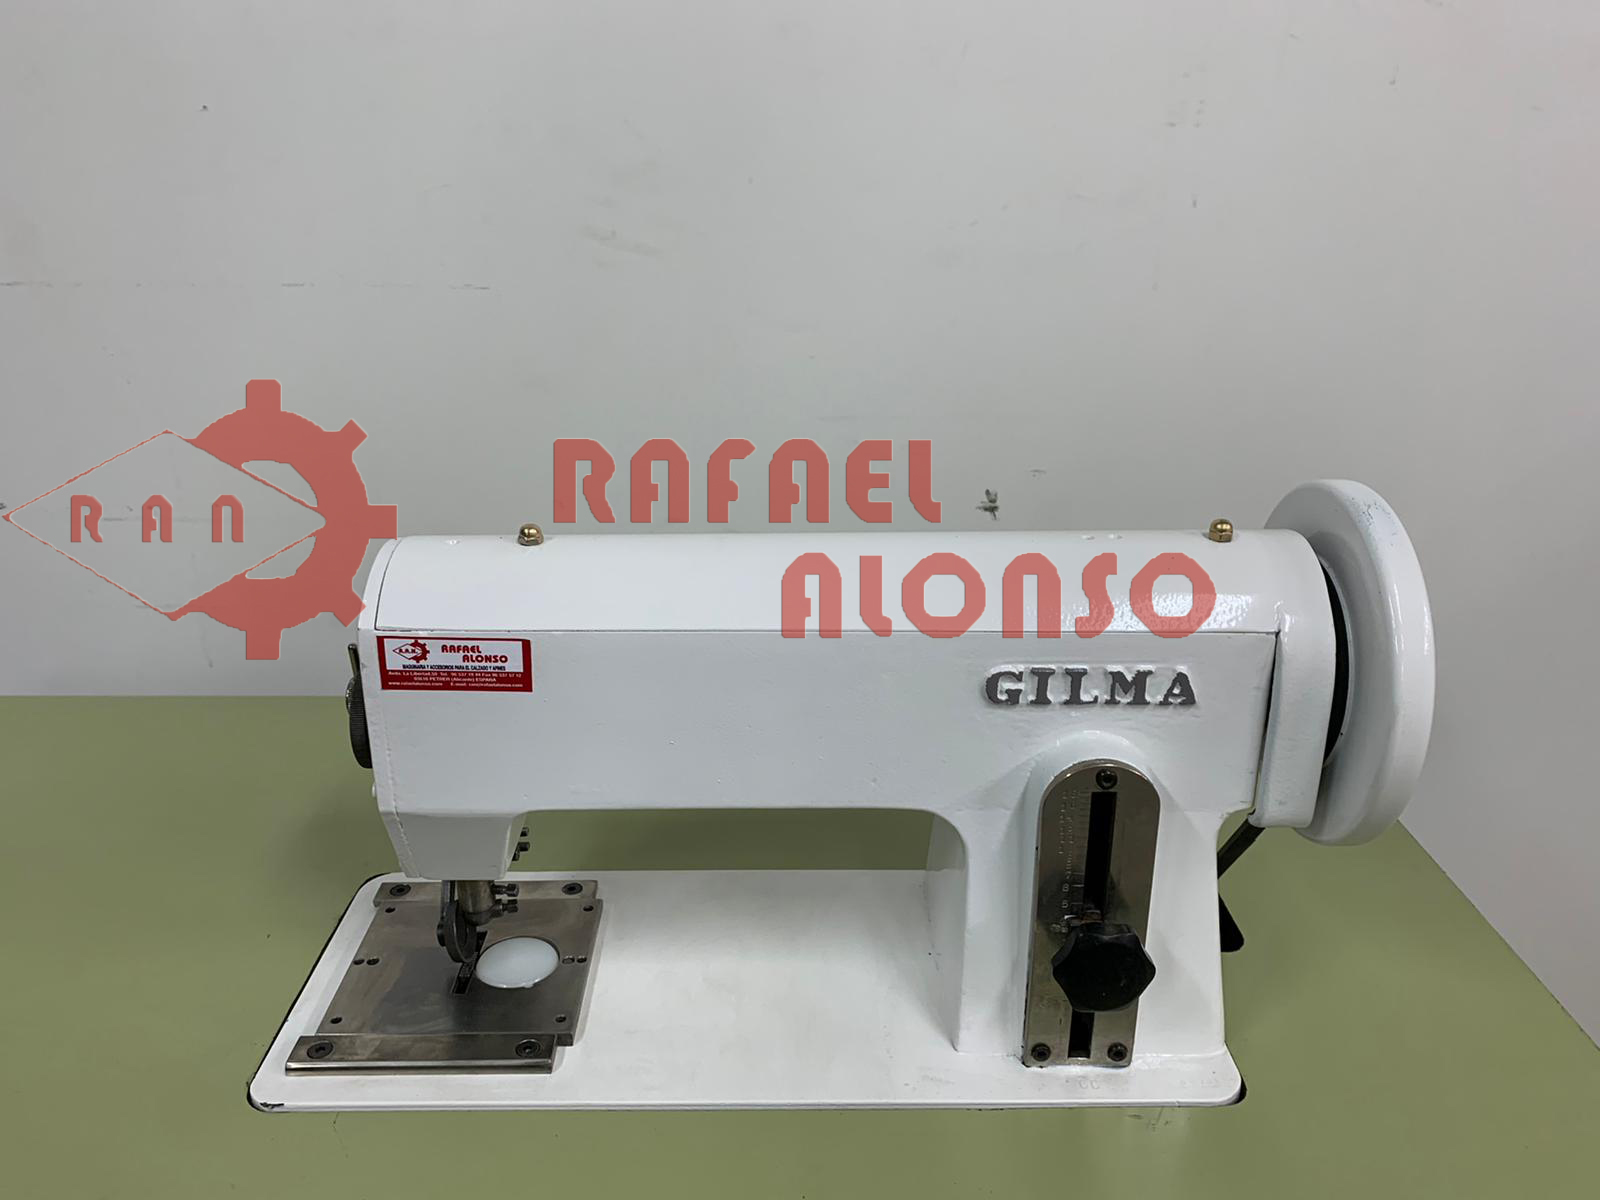 Ref.1148 Troqueladora manual GILMA – Rafael Alonso